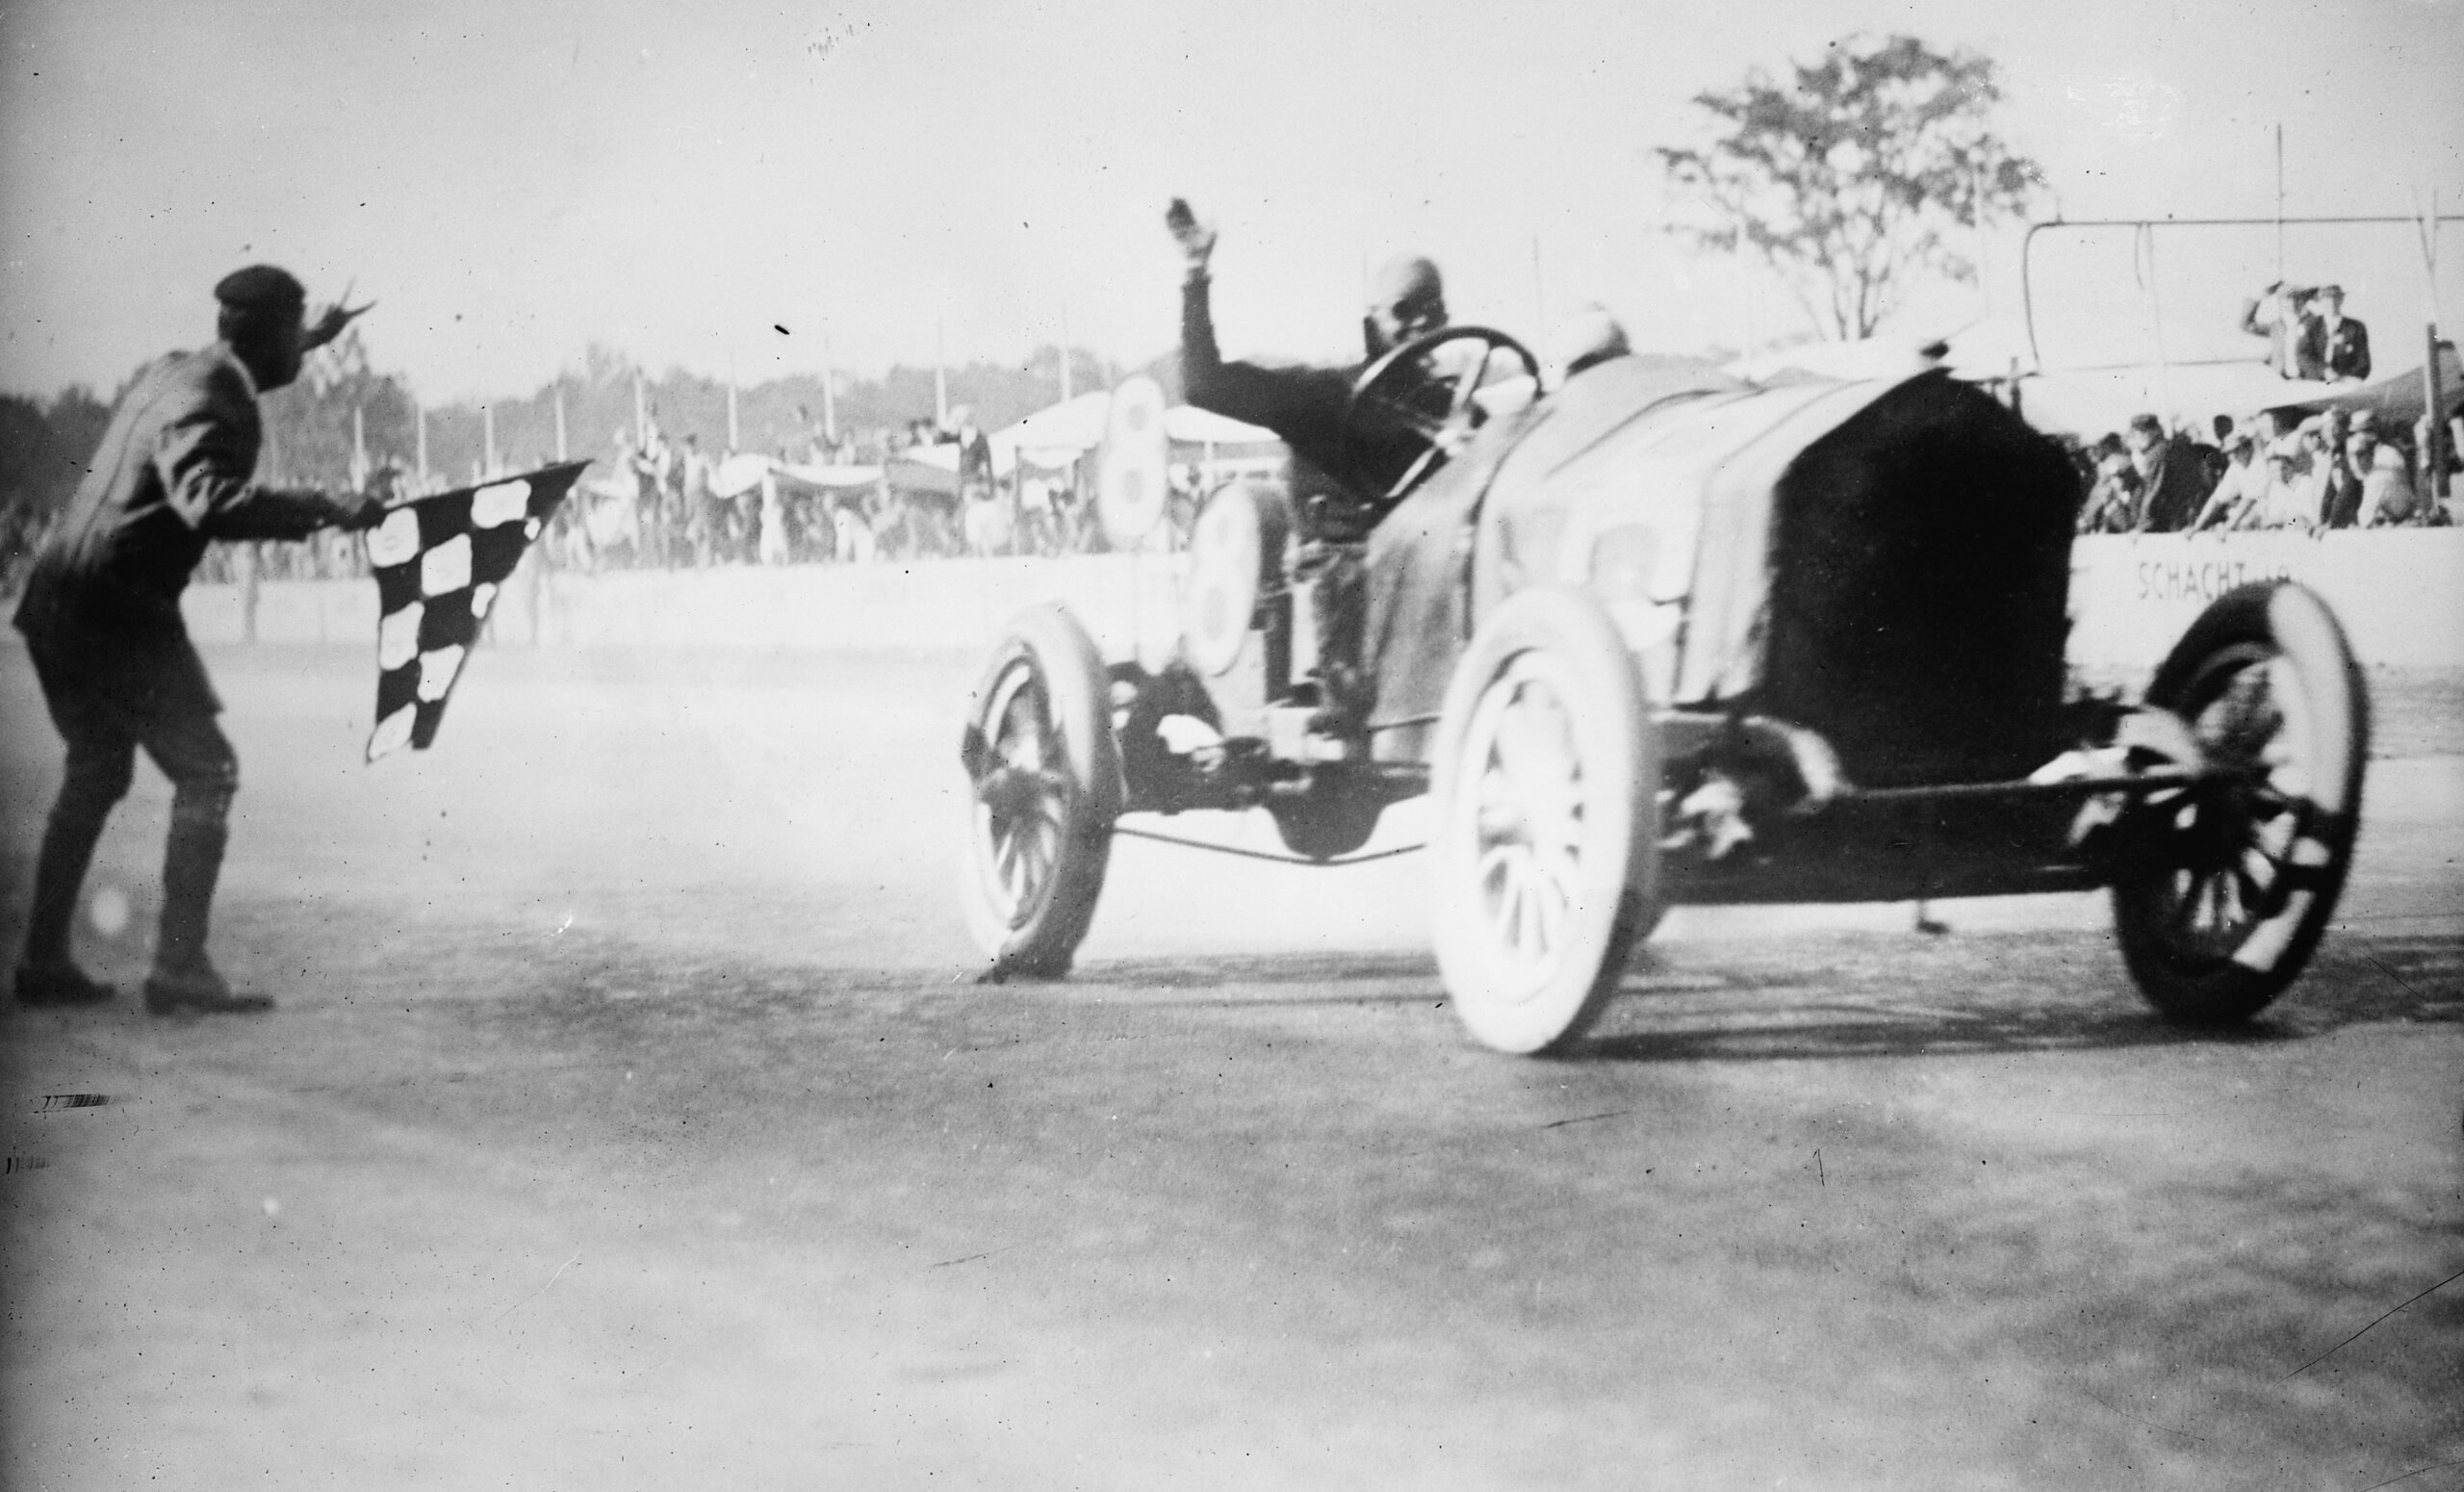 Joe Dawson winning the 1912 Indianapolis 500
